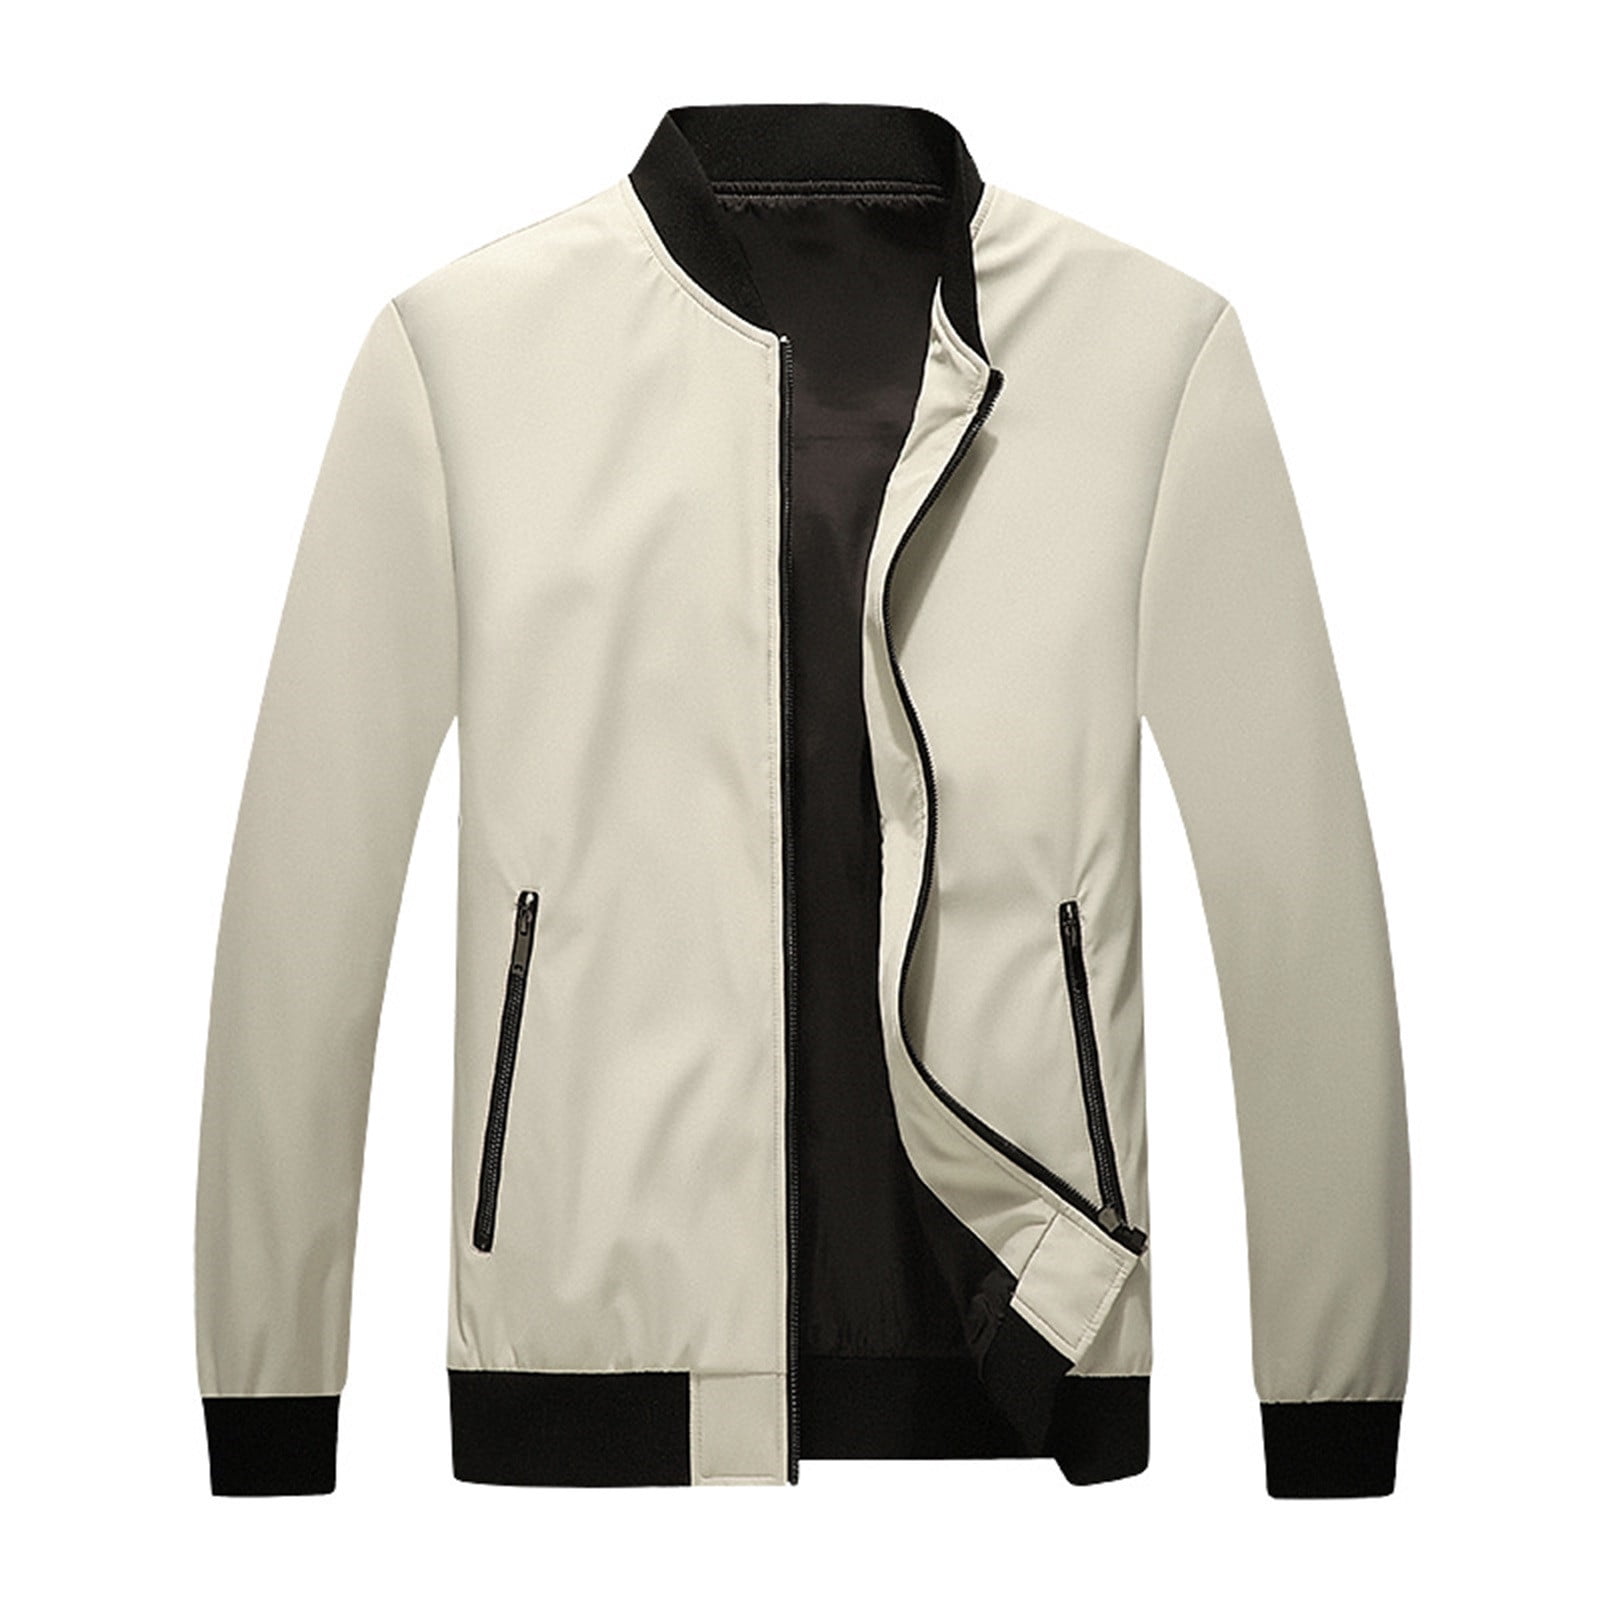 Jackets for Men Lightweight Windbreaker Slim Fit Active Outerwear ...